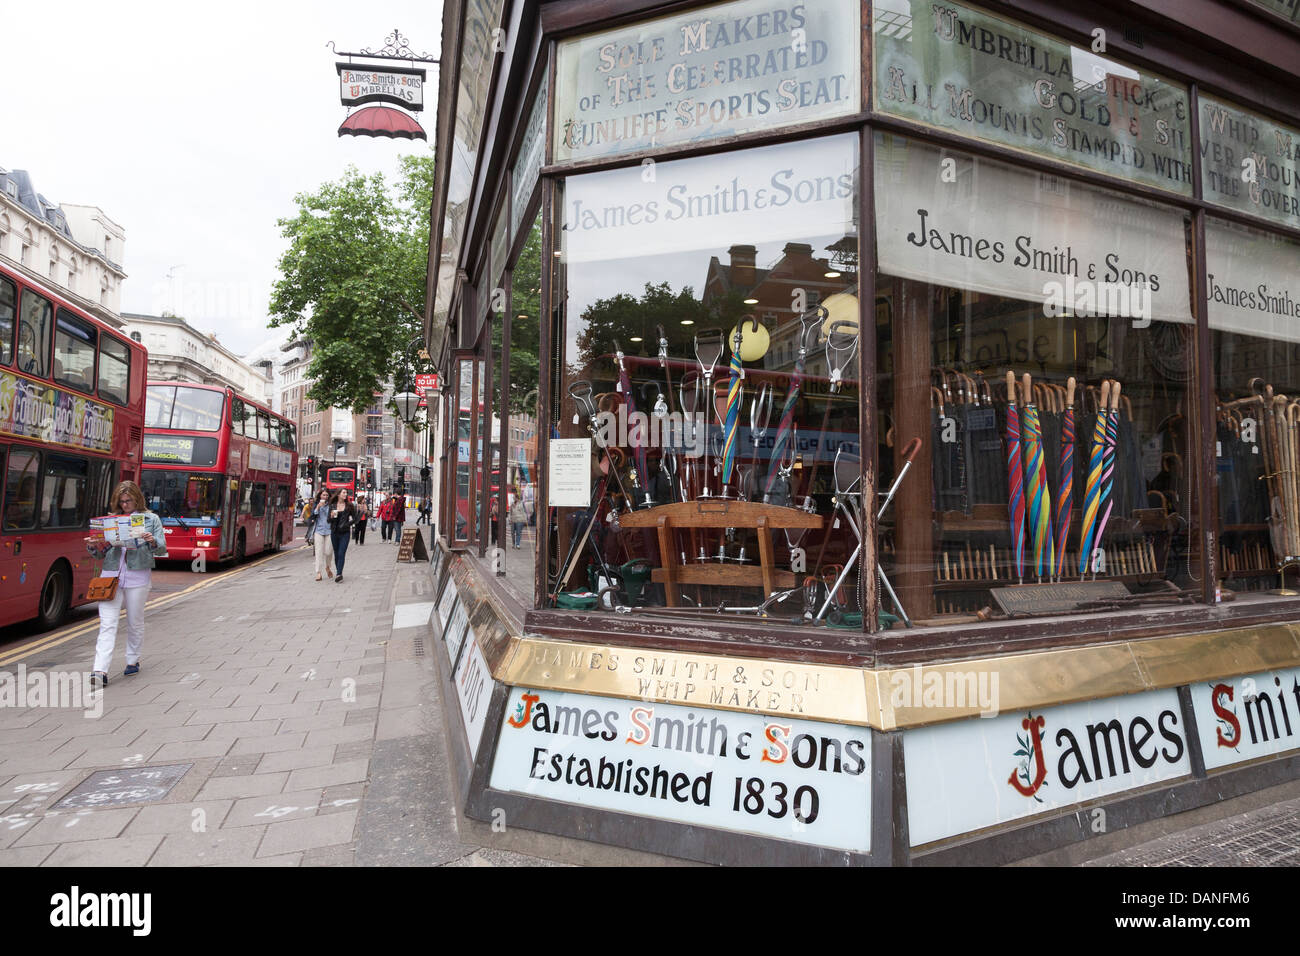 James Smith and Sons, Umbrellas, Shop, London, UK Stock Photo